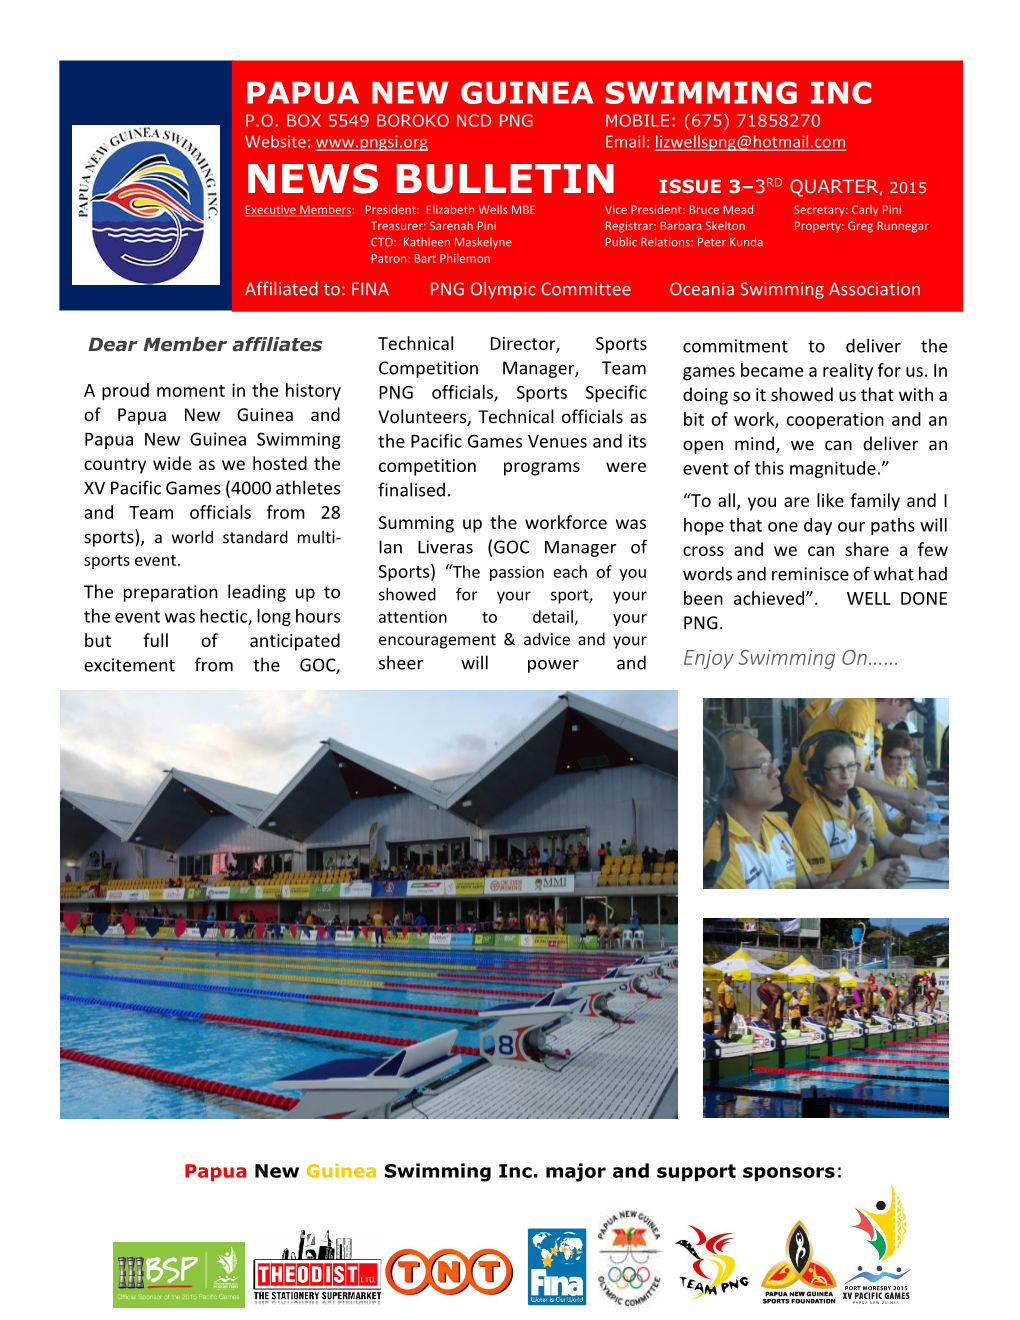 News Bulletin Issue 3–3Rd Quarter, 2015